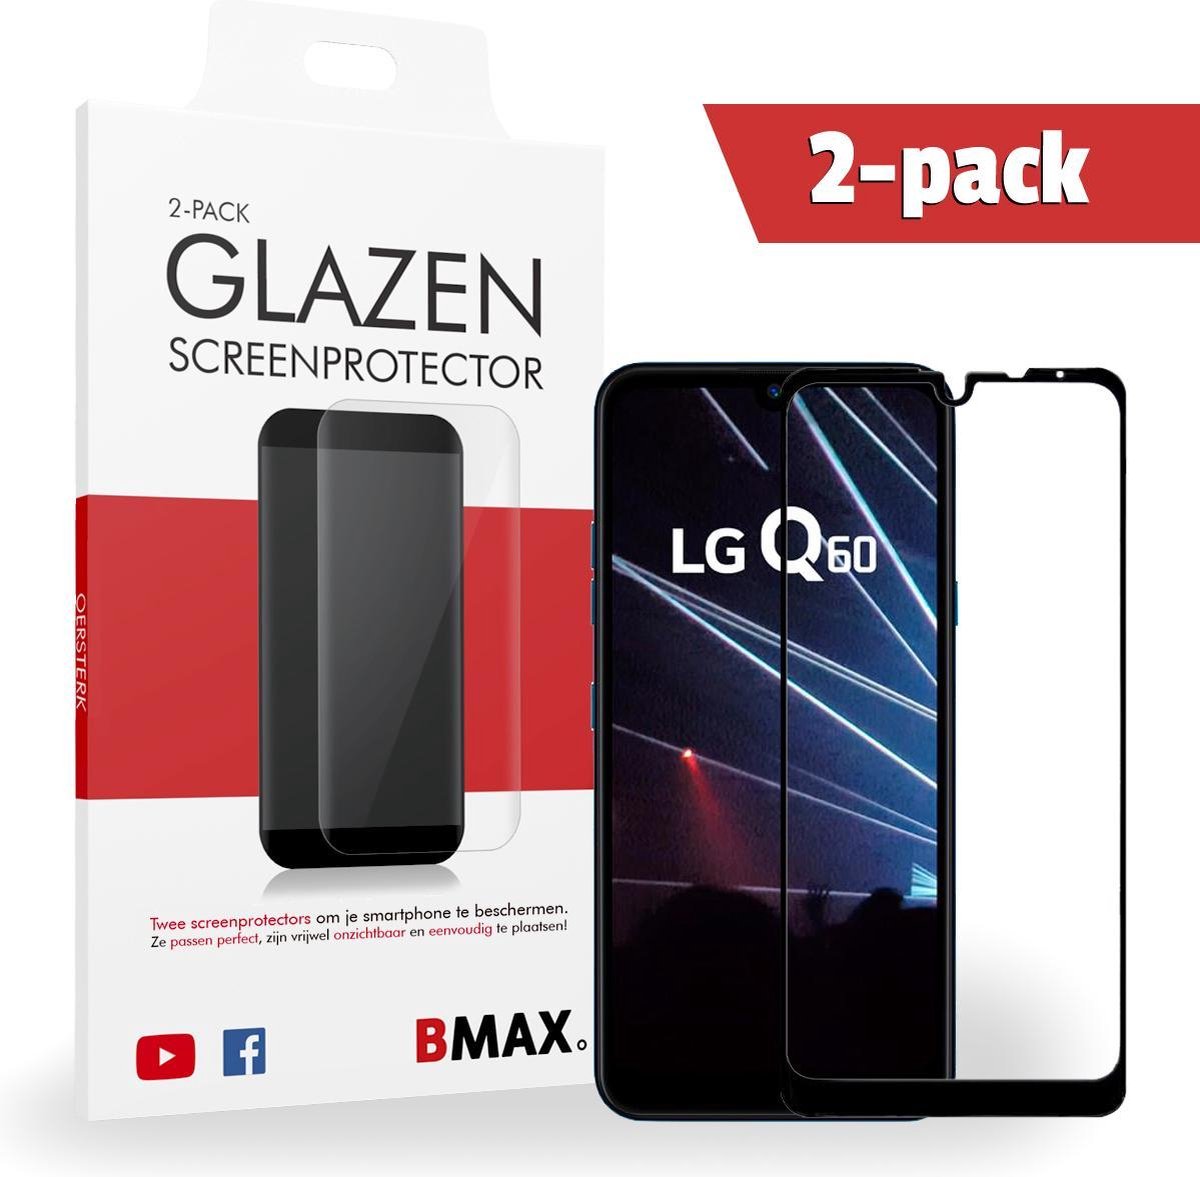 2-pack Bmax Lg Q60 Screenprotector - Glass - Full Cover 2.5d - Black